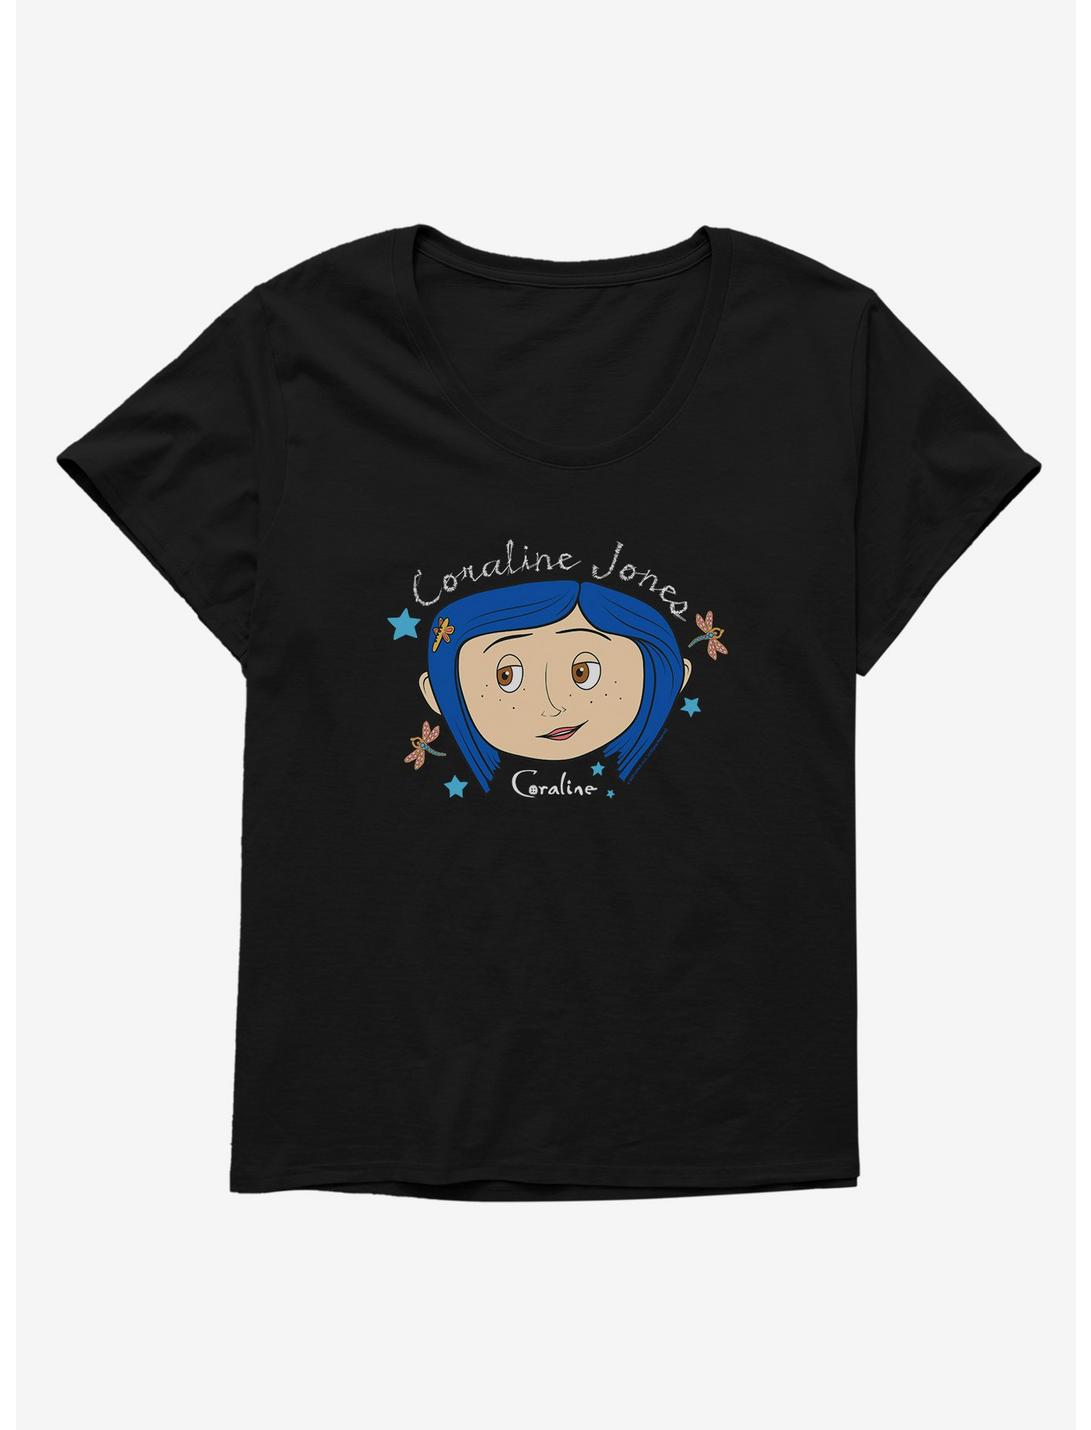 Coraline Coraline Jones Womens T-Shirt Plus Size, BLACK, hi-res